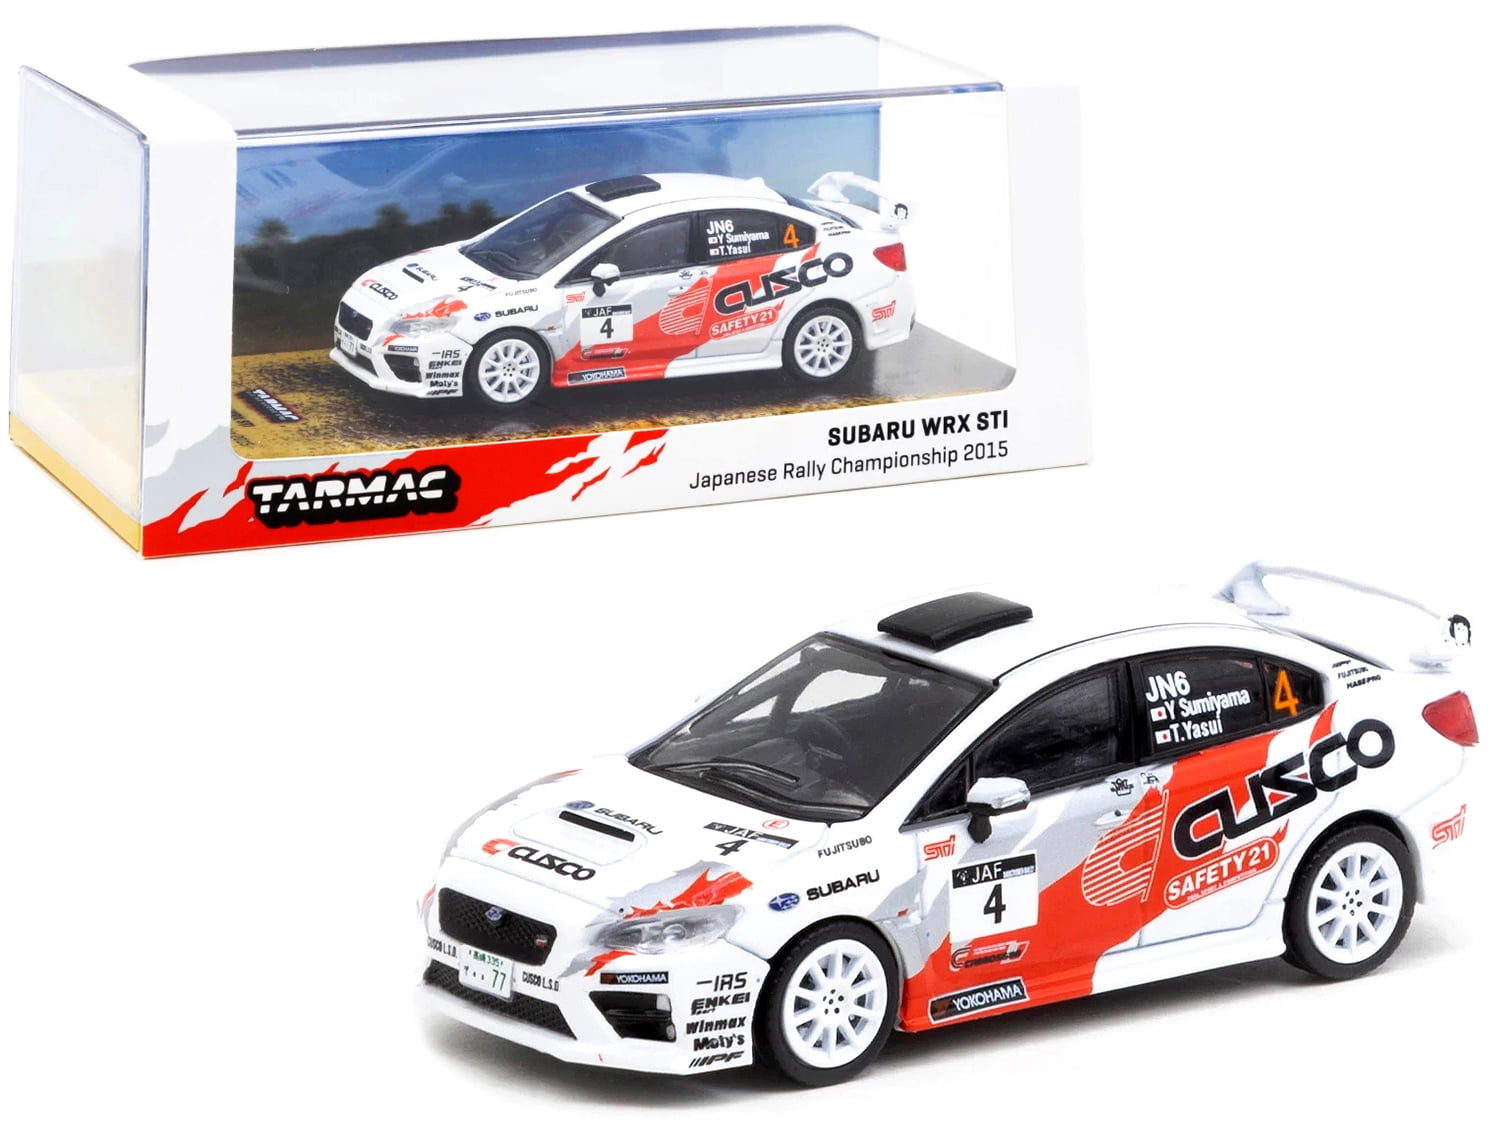 New SUBARU IMPREZA WRC Ride-on toy Car for kids From Japan 